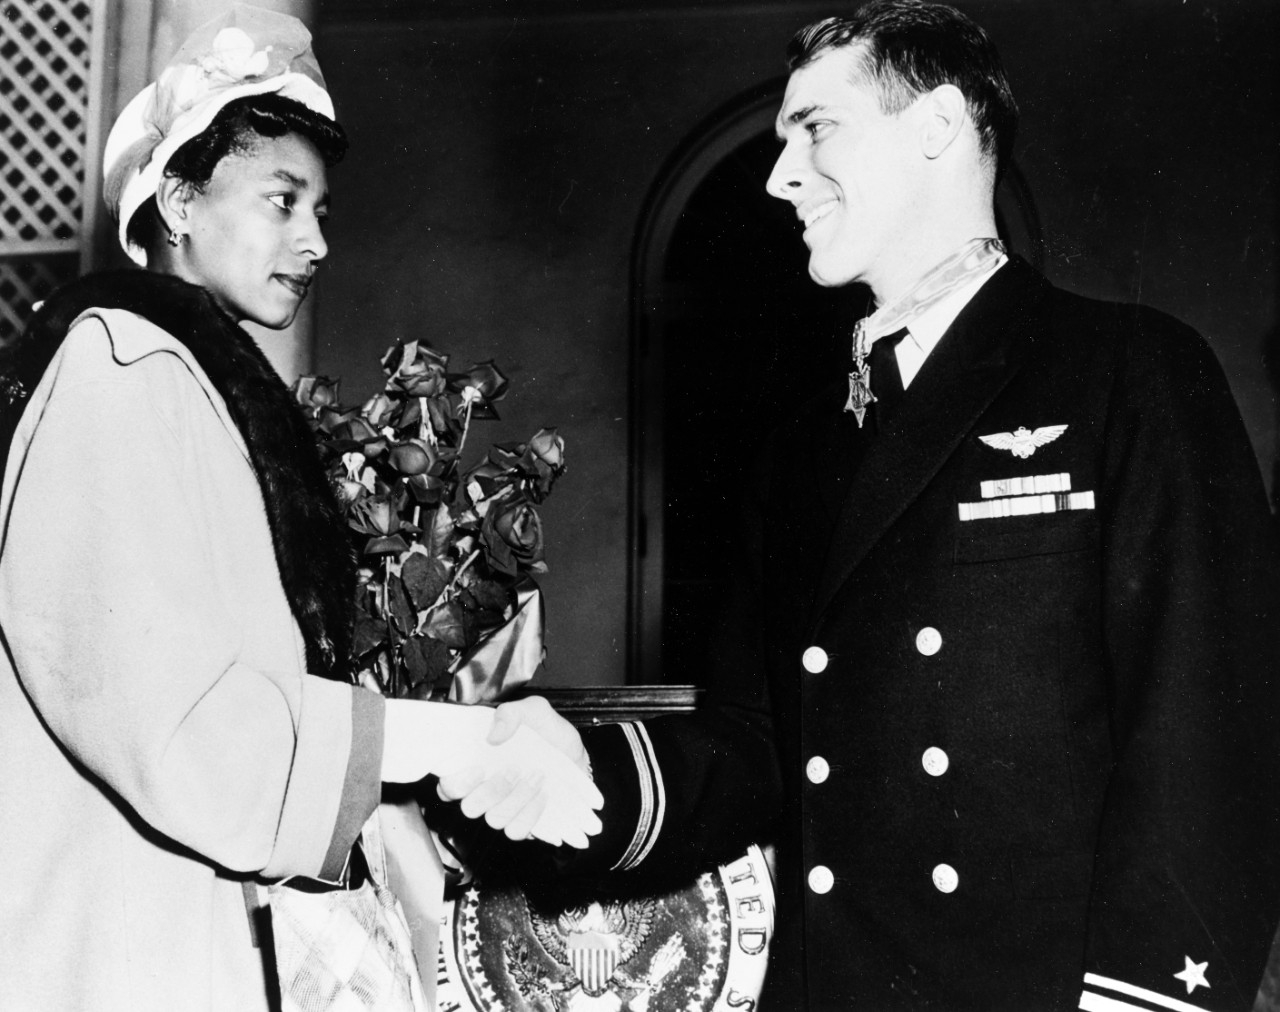 Lieutenant (j.g.) Thomas J. Hudner, Jr., was congratulated by Daisy P. Brown